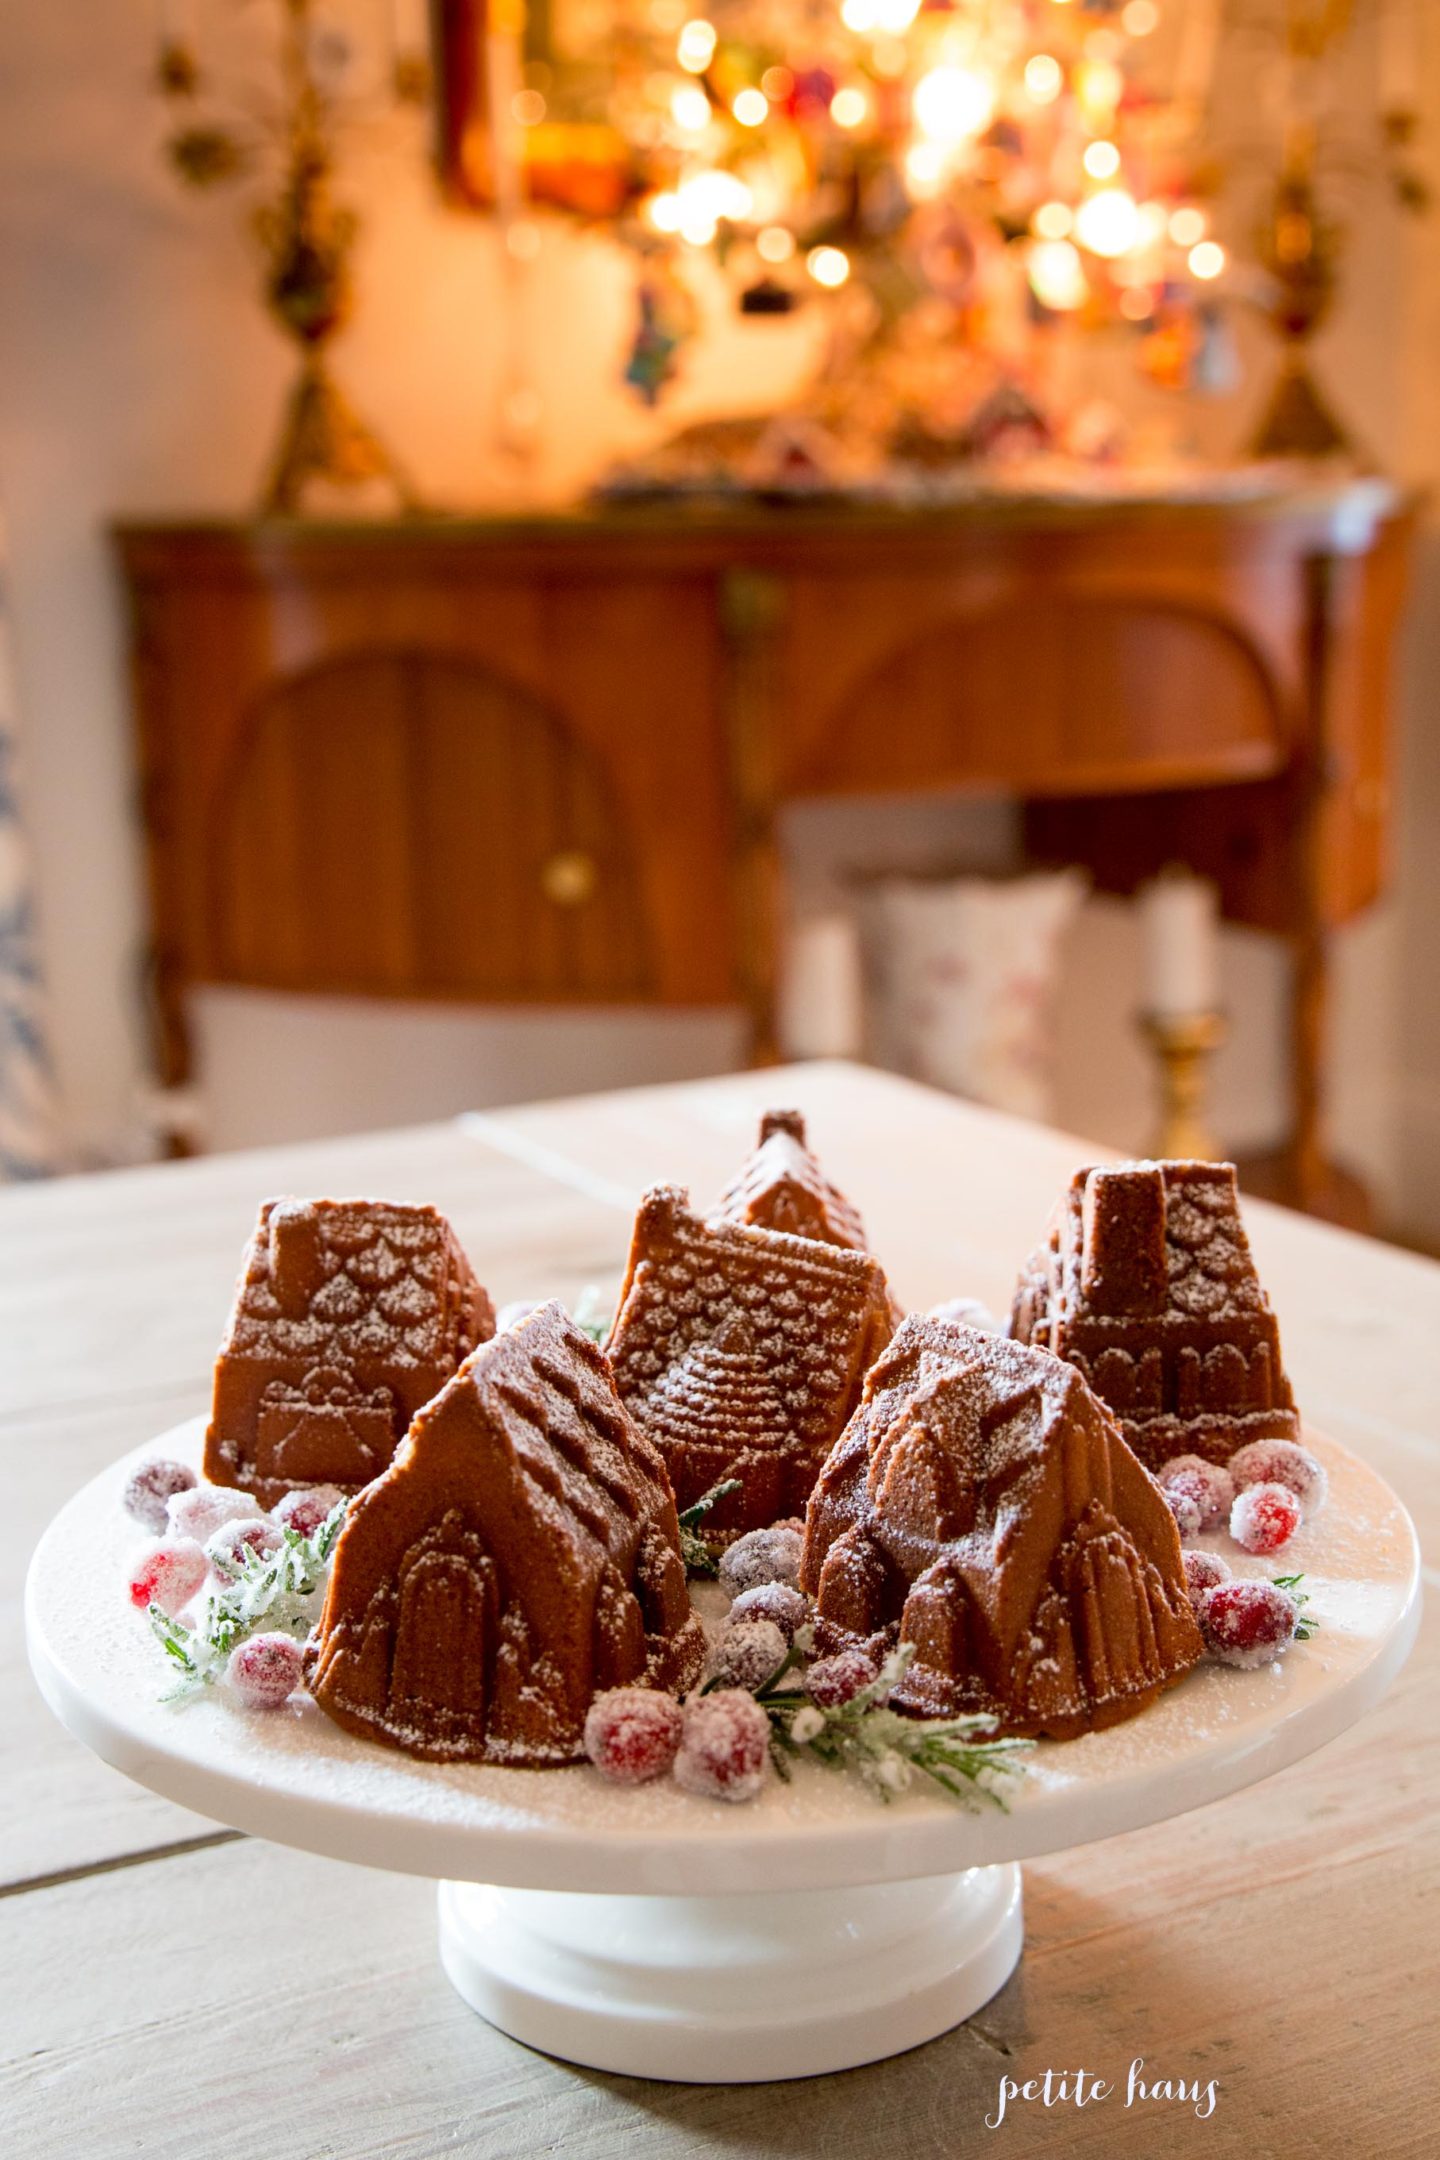  Nordic Ware Gingerbread Kids Cakelet Pan: Novelty Cake